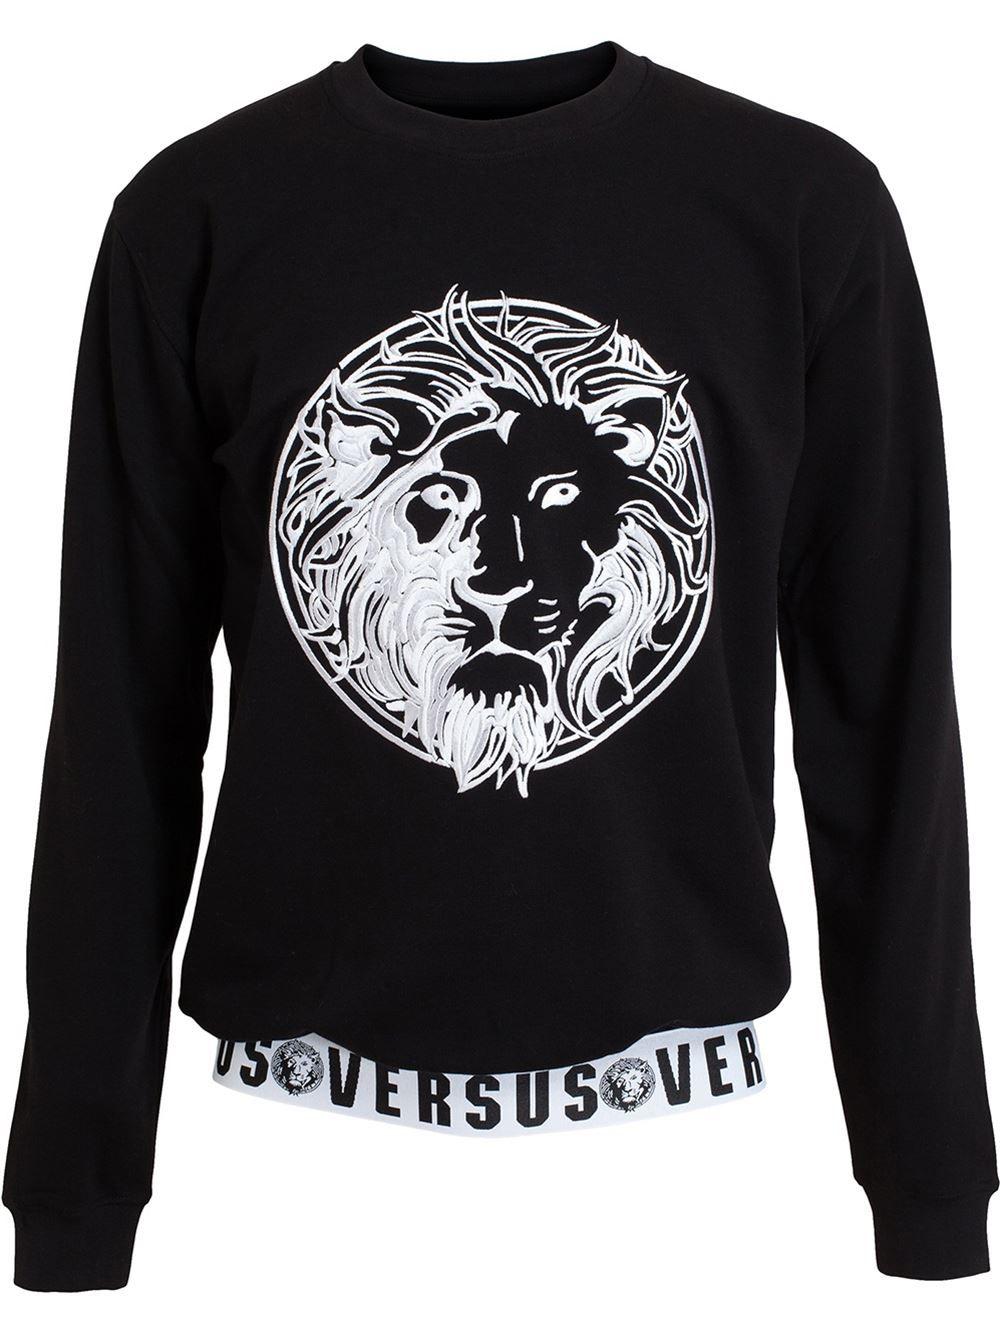 Clothing with Lion Logo - Lyst - Versus Lion Logo Sweatshirt in Black for Men